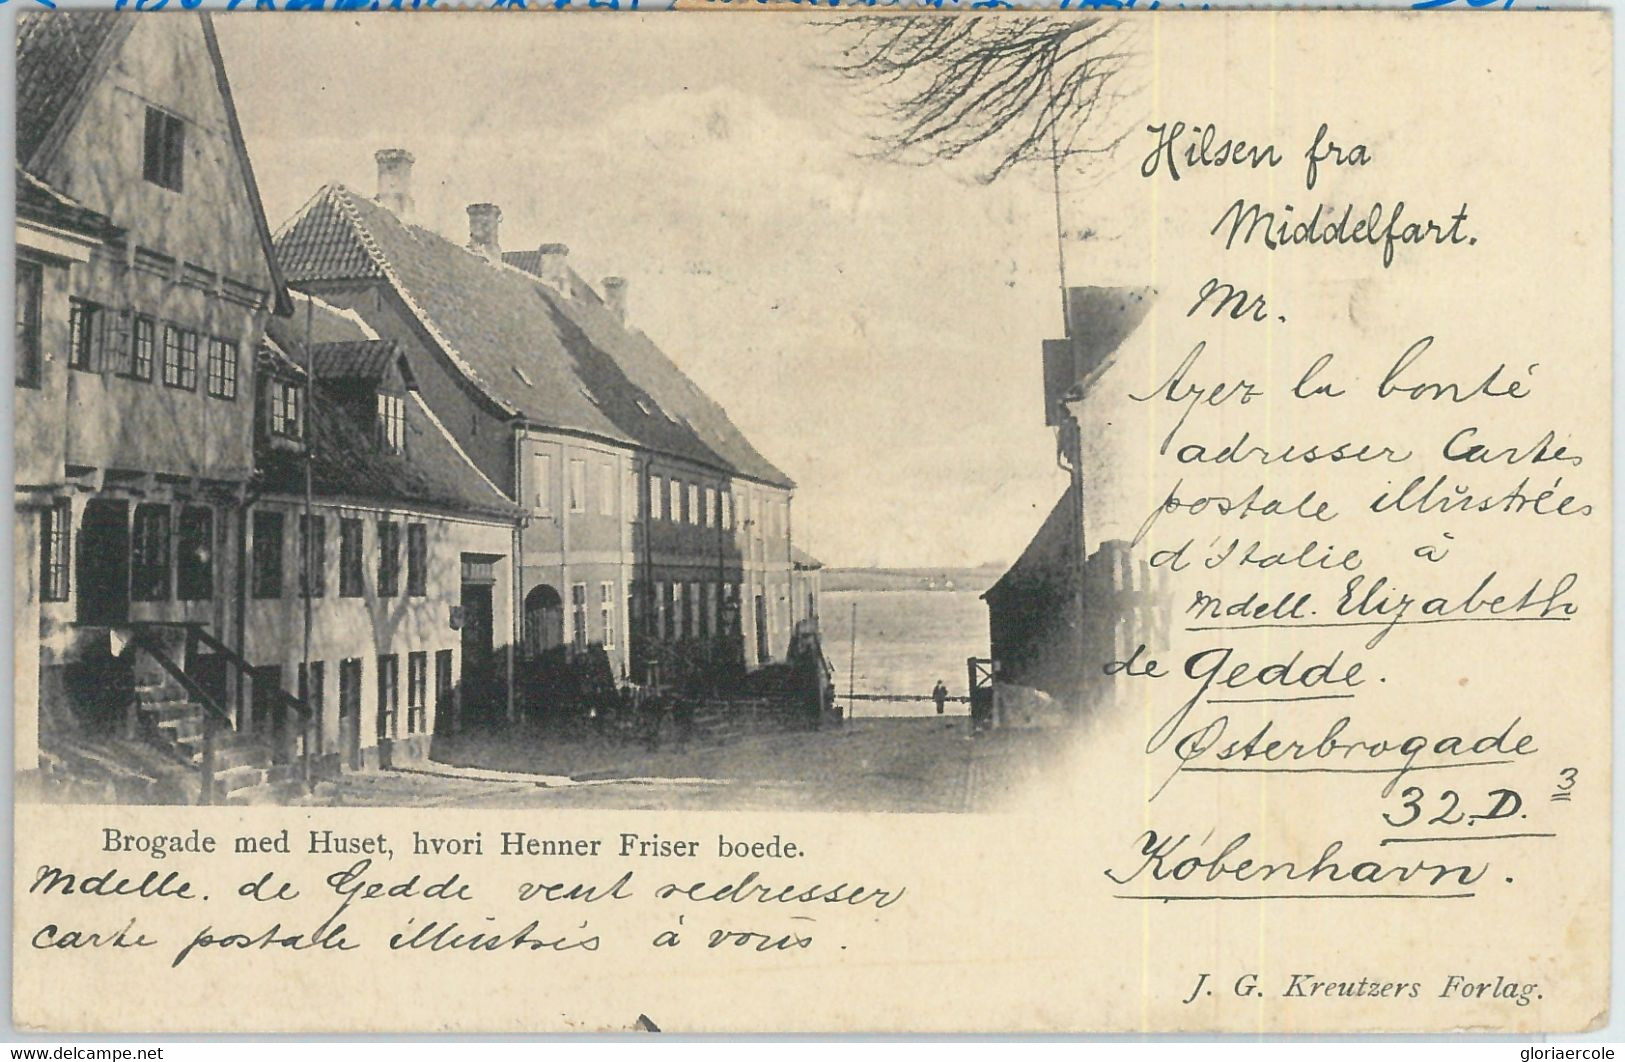 81894 - DENMARK - Postal History -  TRAIN AMBULANT Postmark  On POSTCARD  1902 - Covers & Documents